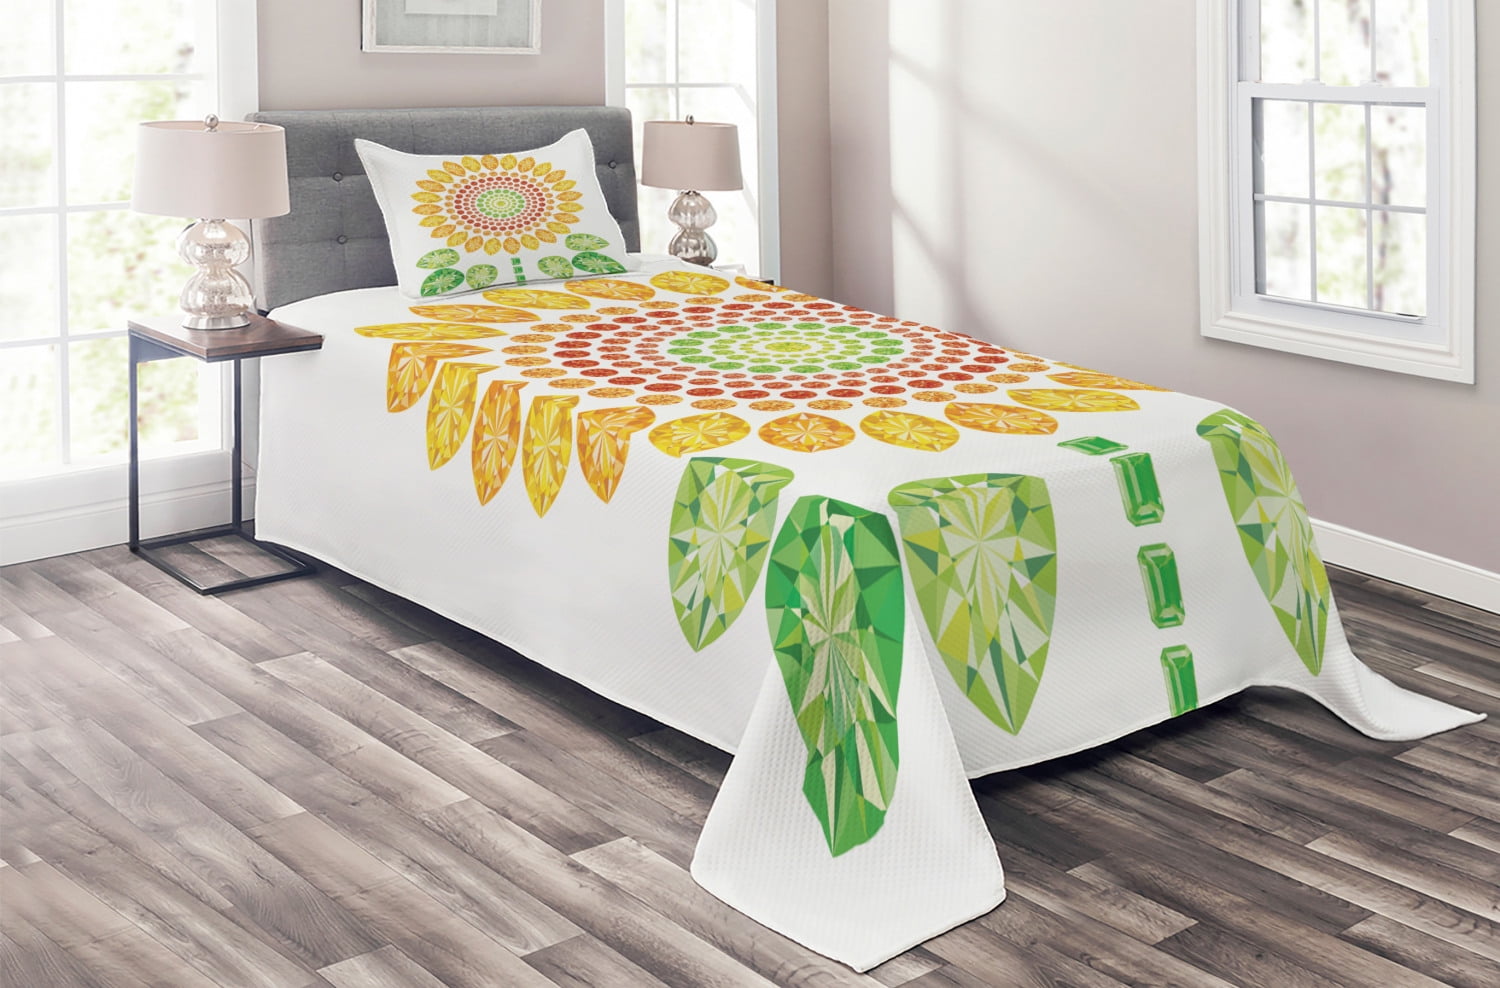 Details about   Inspirational Quilted Bedspread & Pillow Shams Set Aquarelle Print 